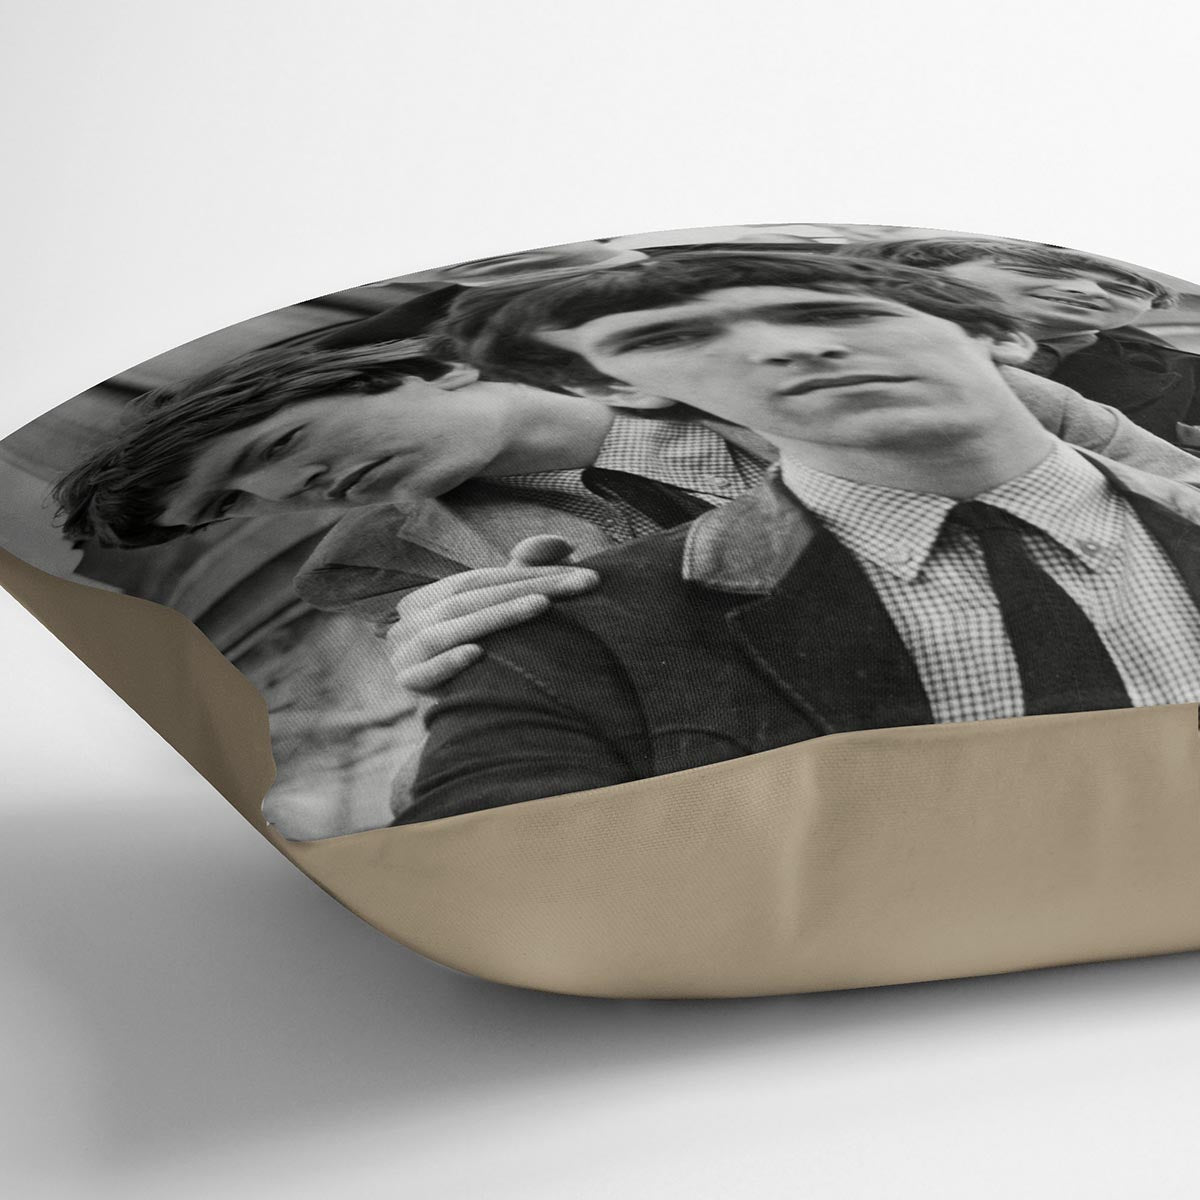 The Spencer Davis Group Cushion